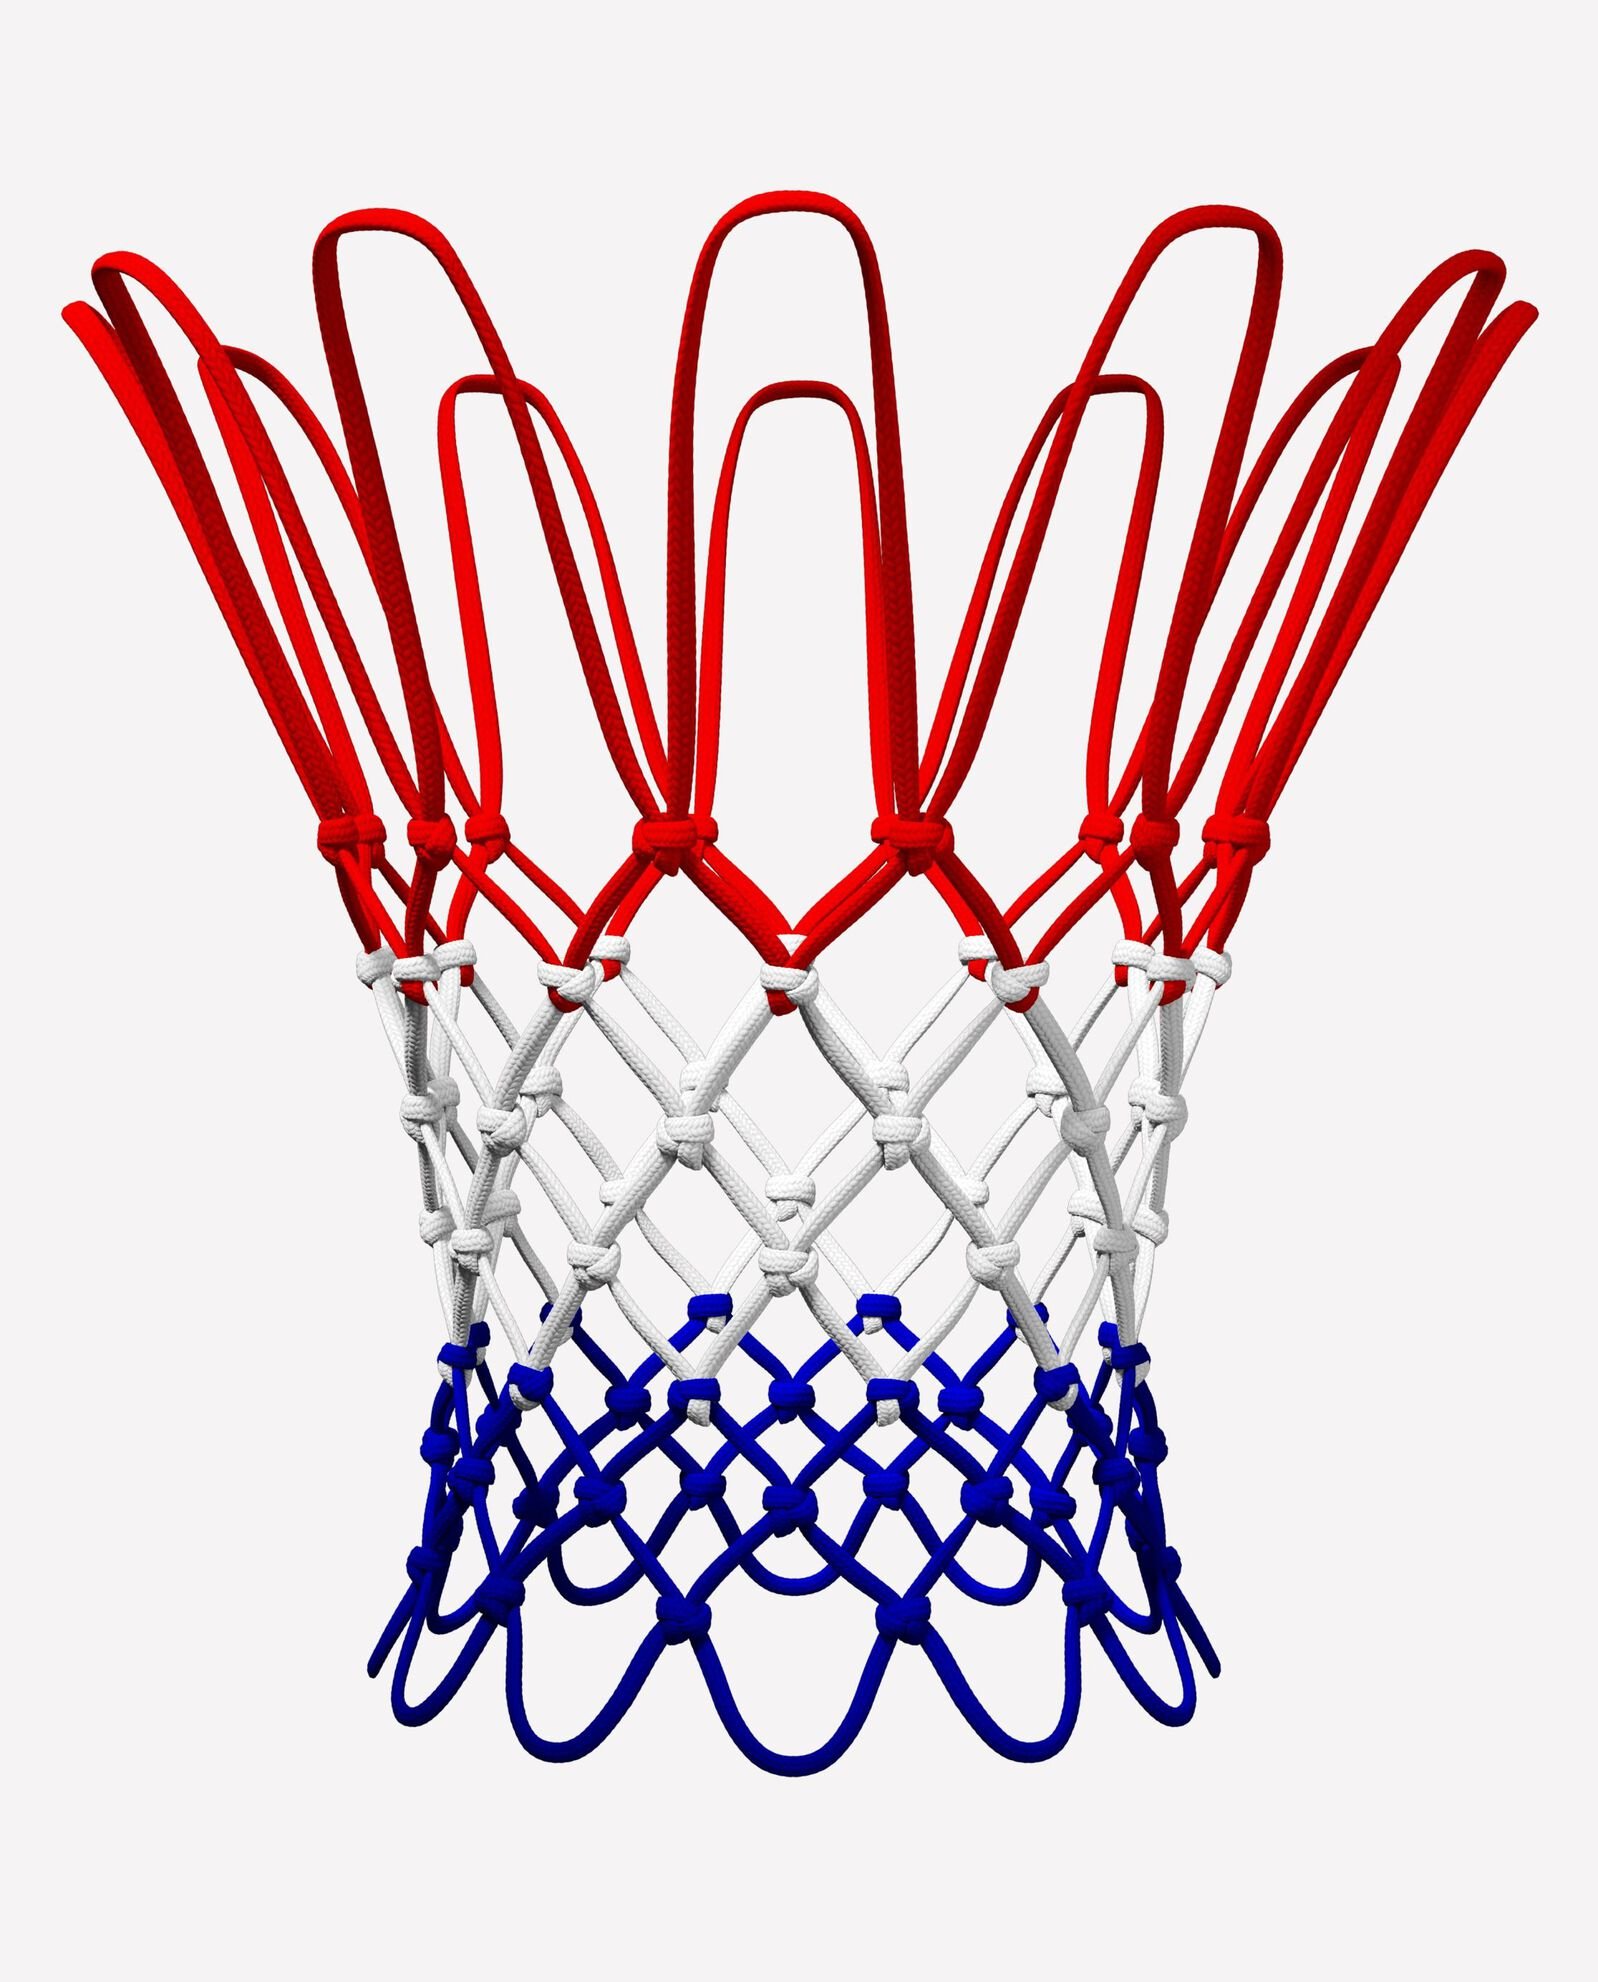 Heavy Duty Basketball Net - Red/White/Blue red/white/blue